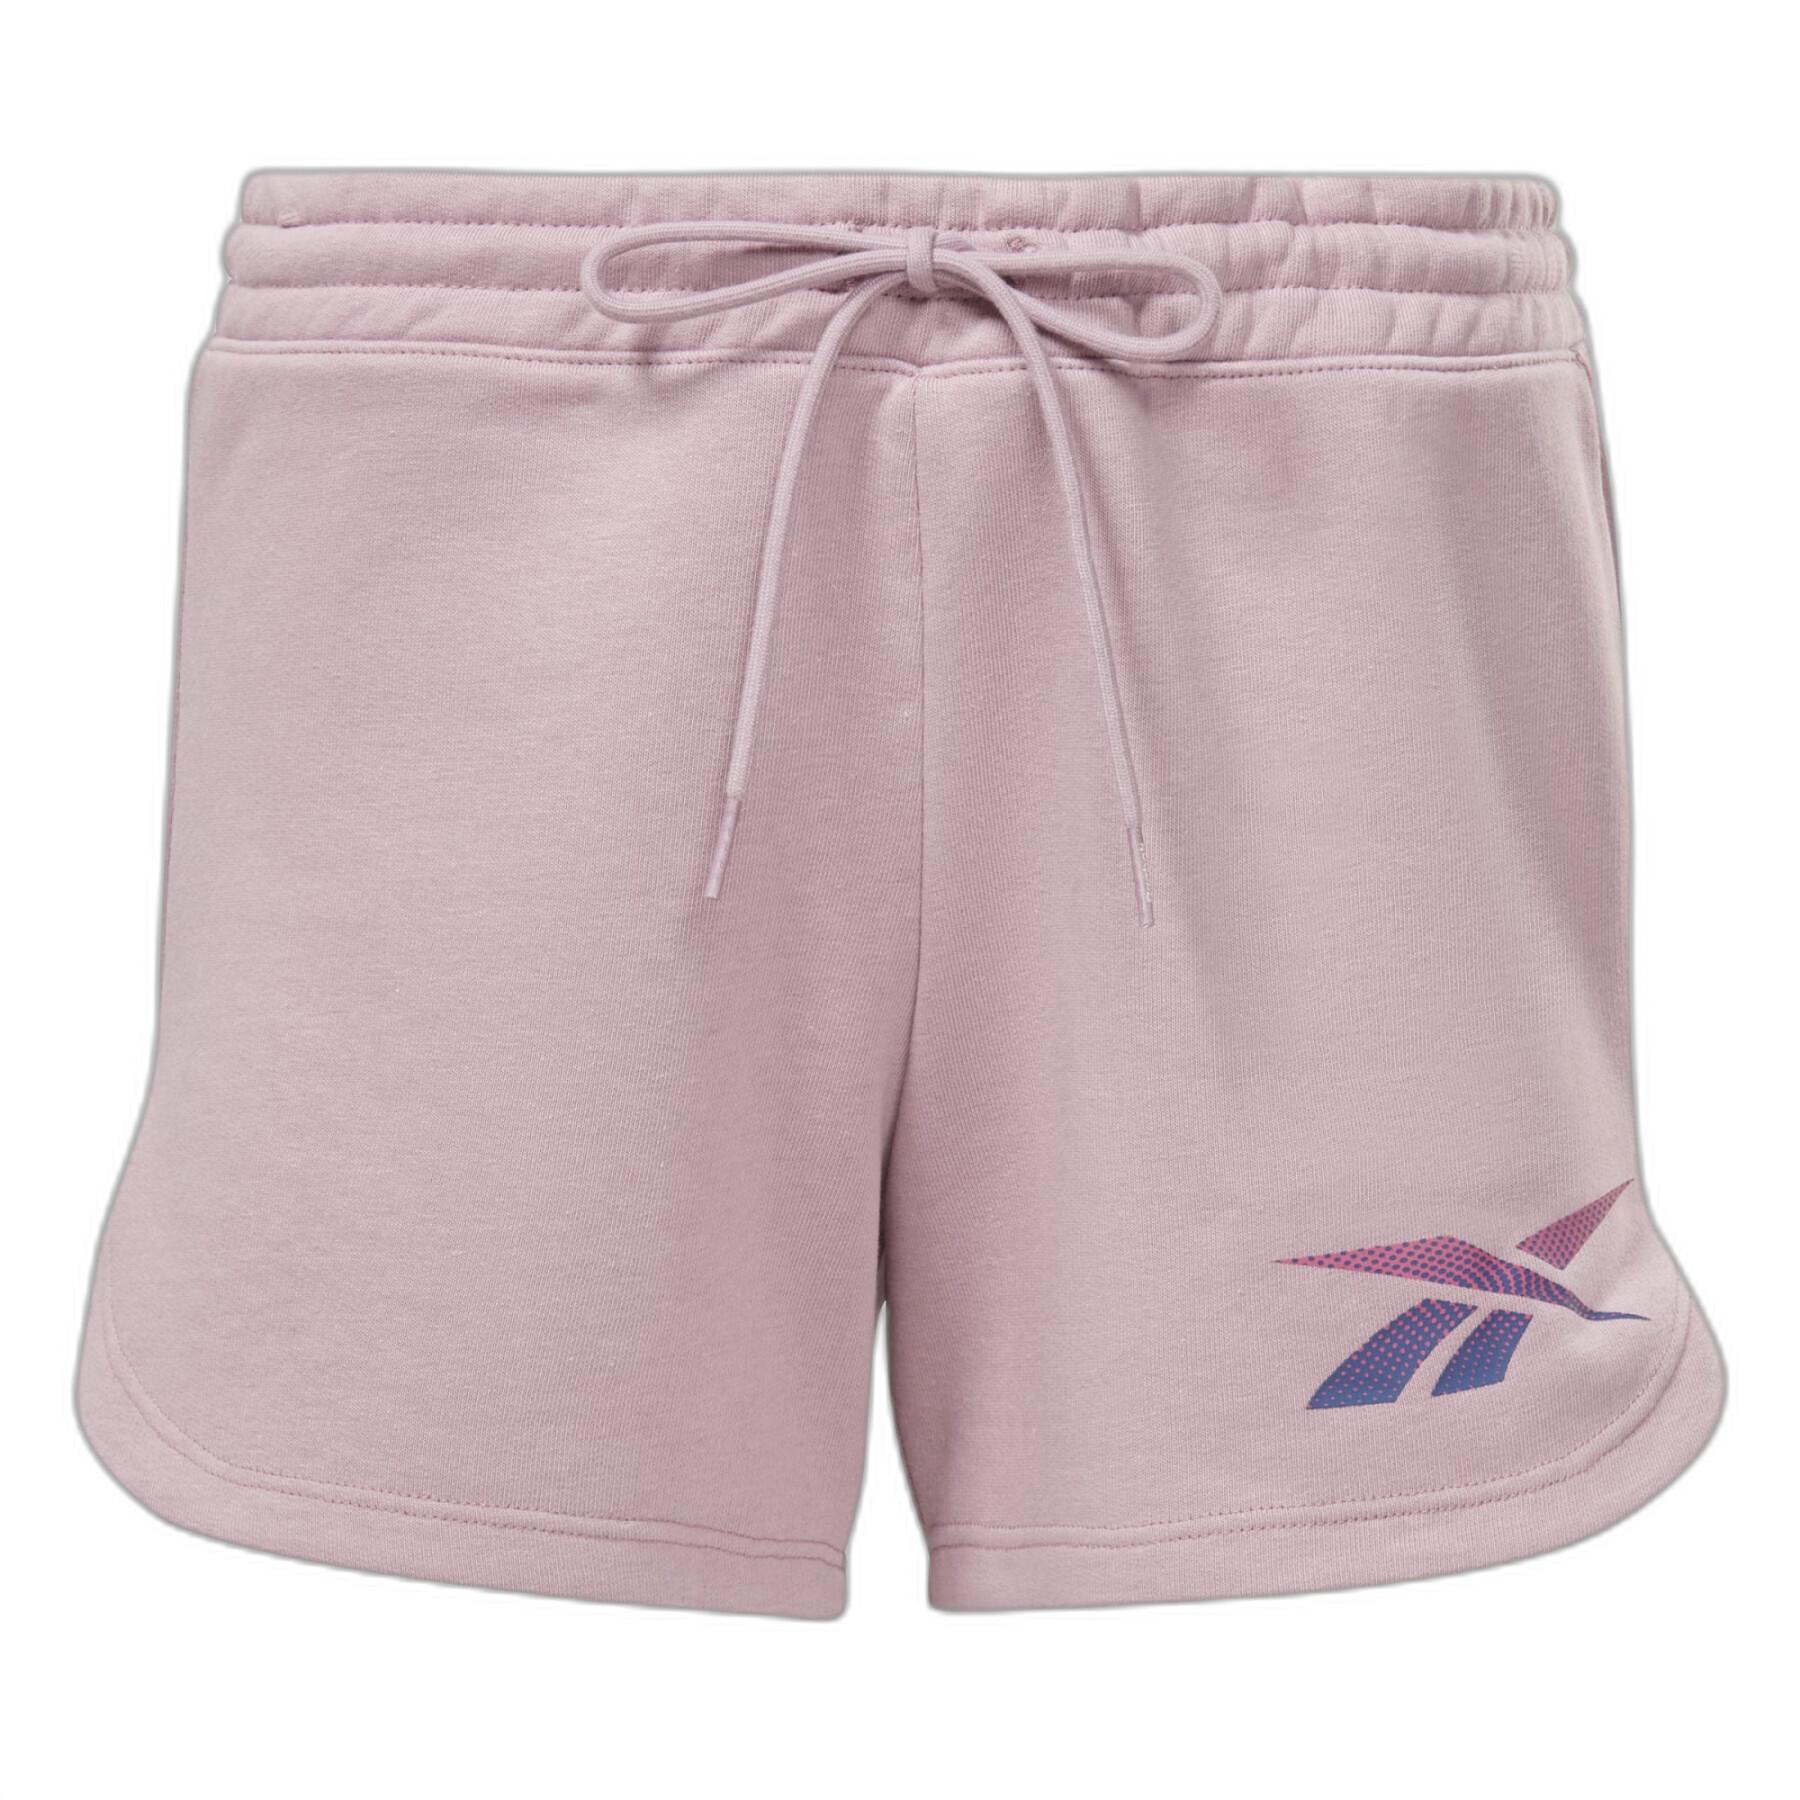 Women's shorts Reebok Doorbuster Identity French Terry